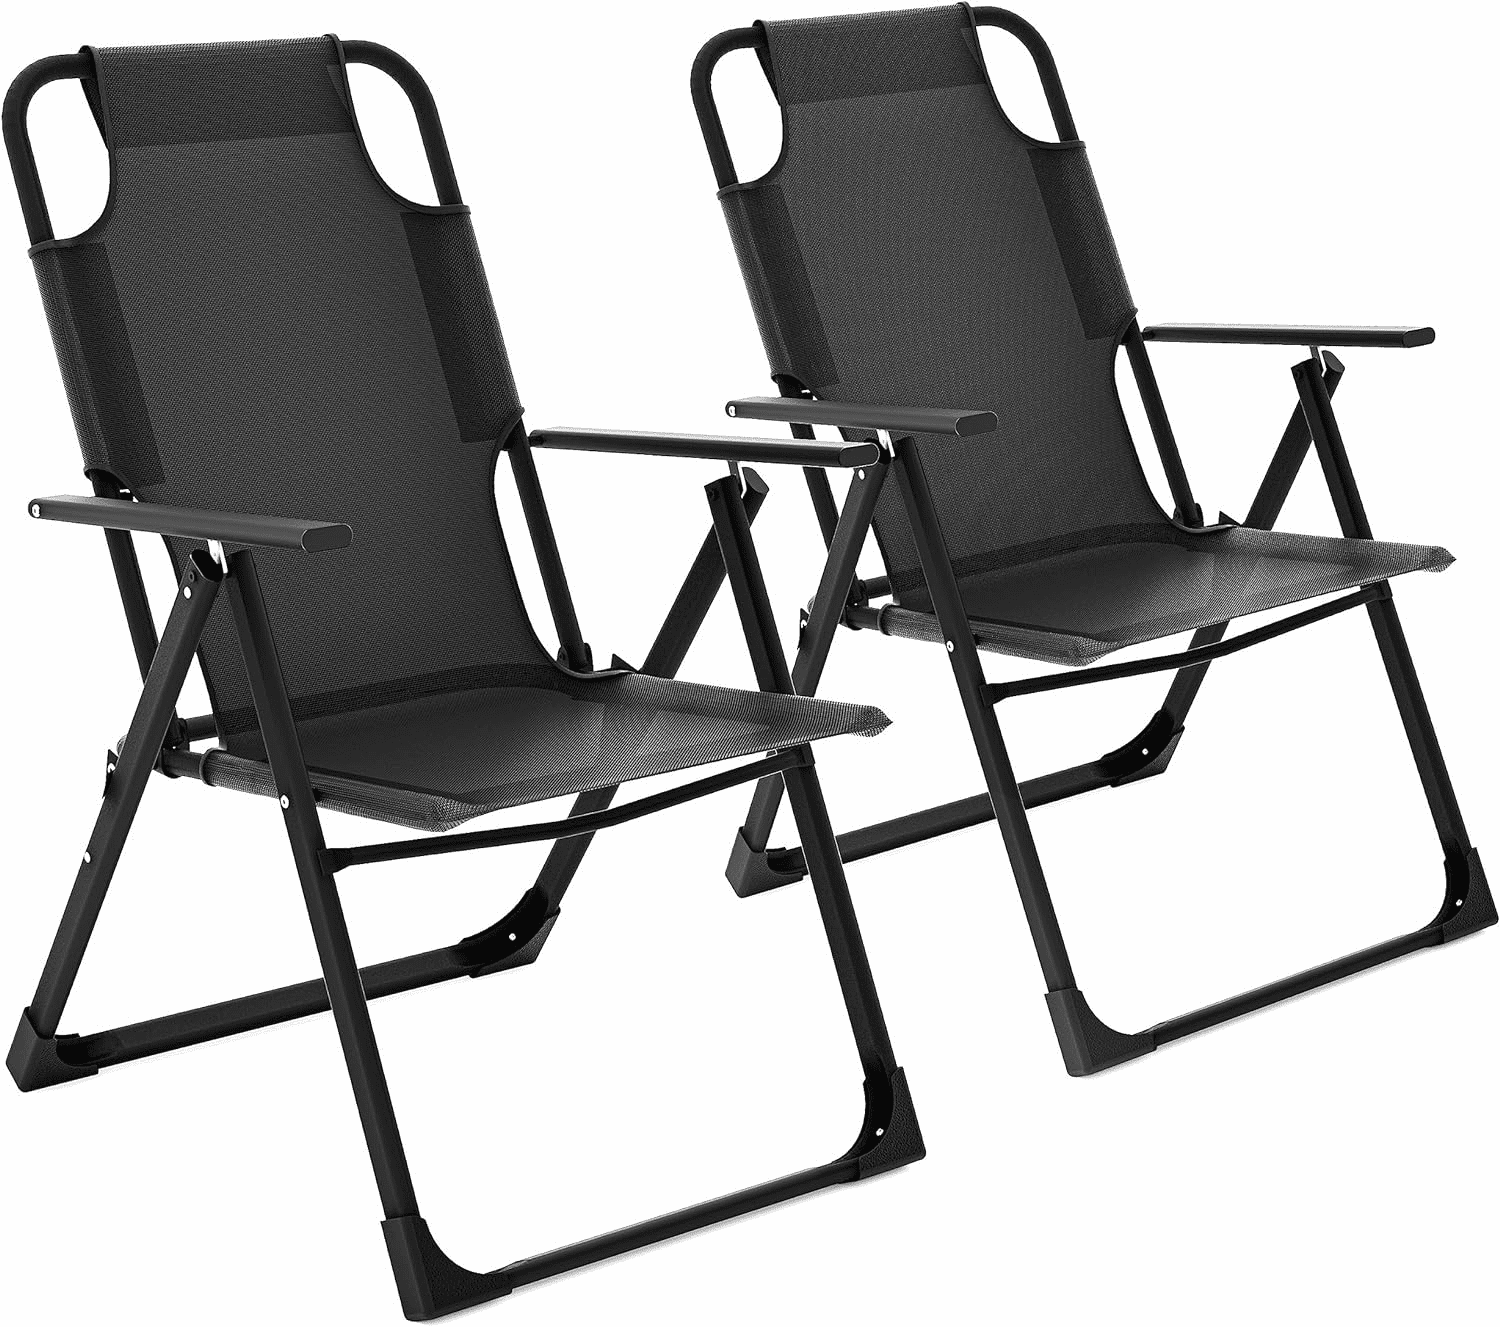 ELPOSUN Outdoor Folding Patio Sling Chairs Set of 2, Heavy Duty ...